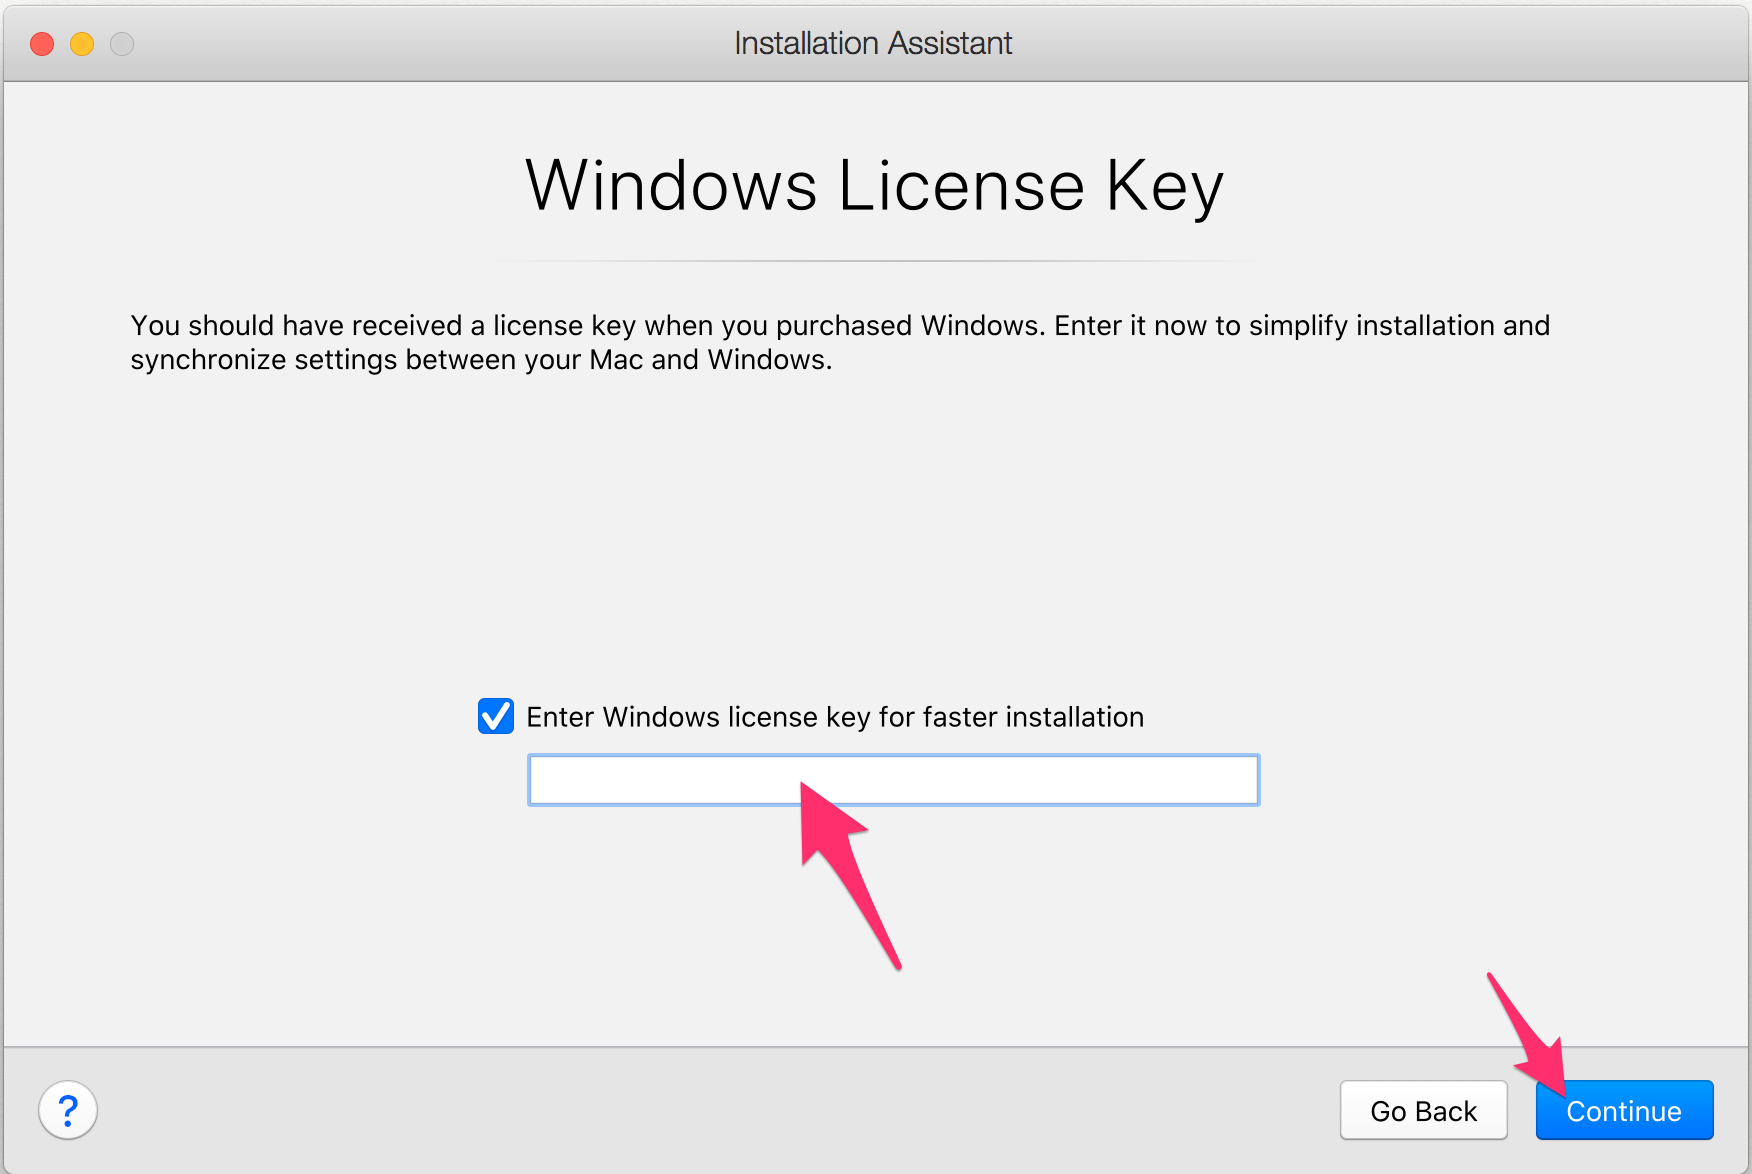 Windows License Key screen